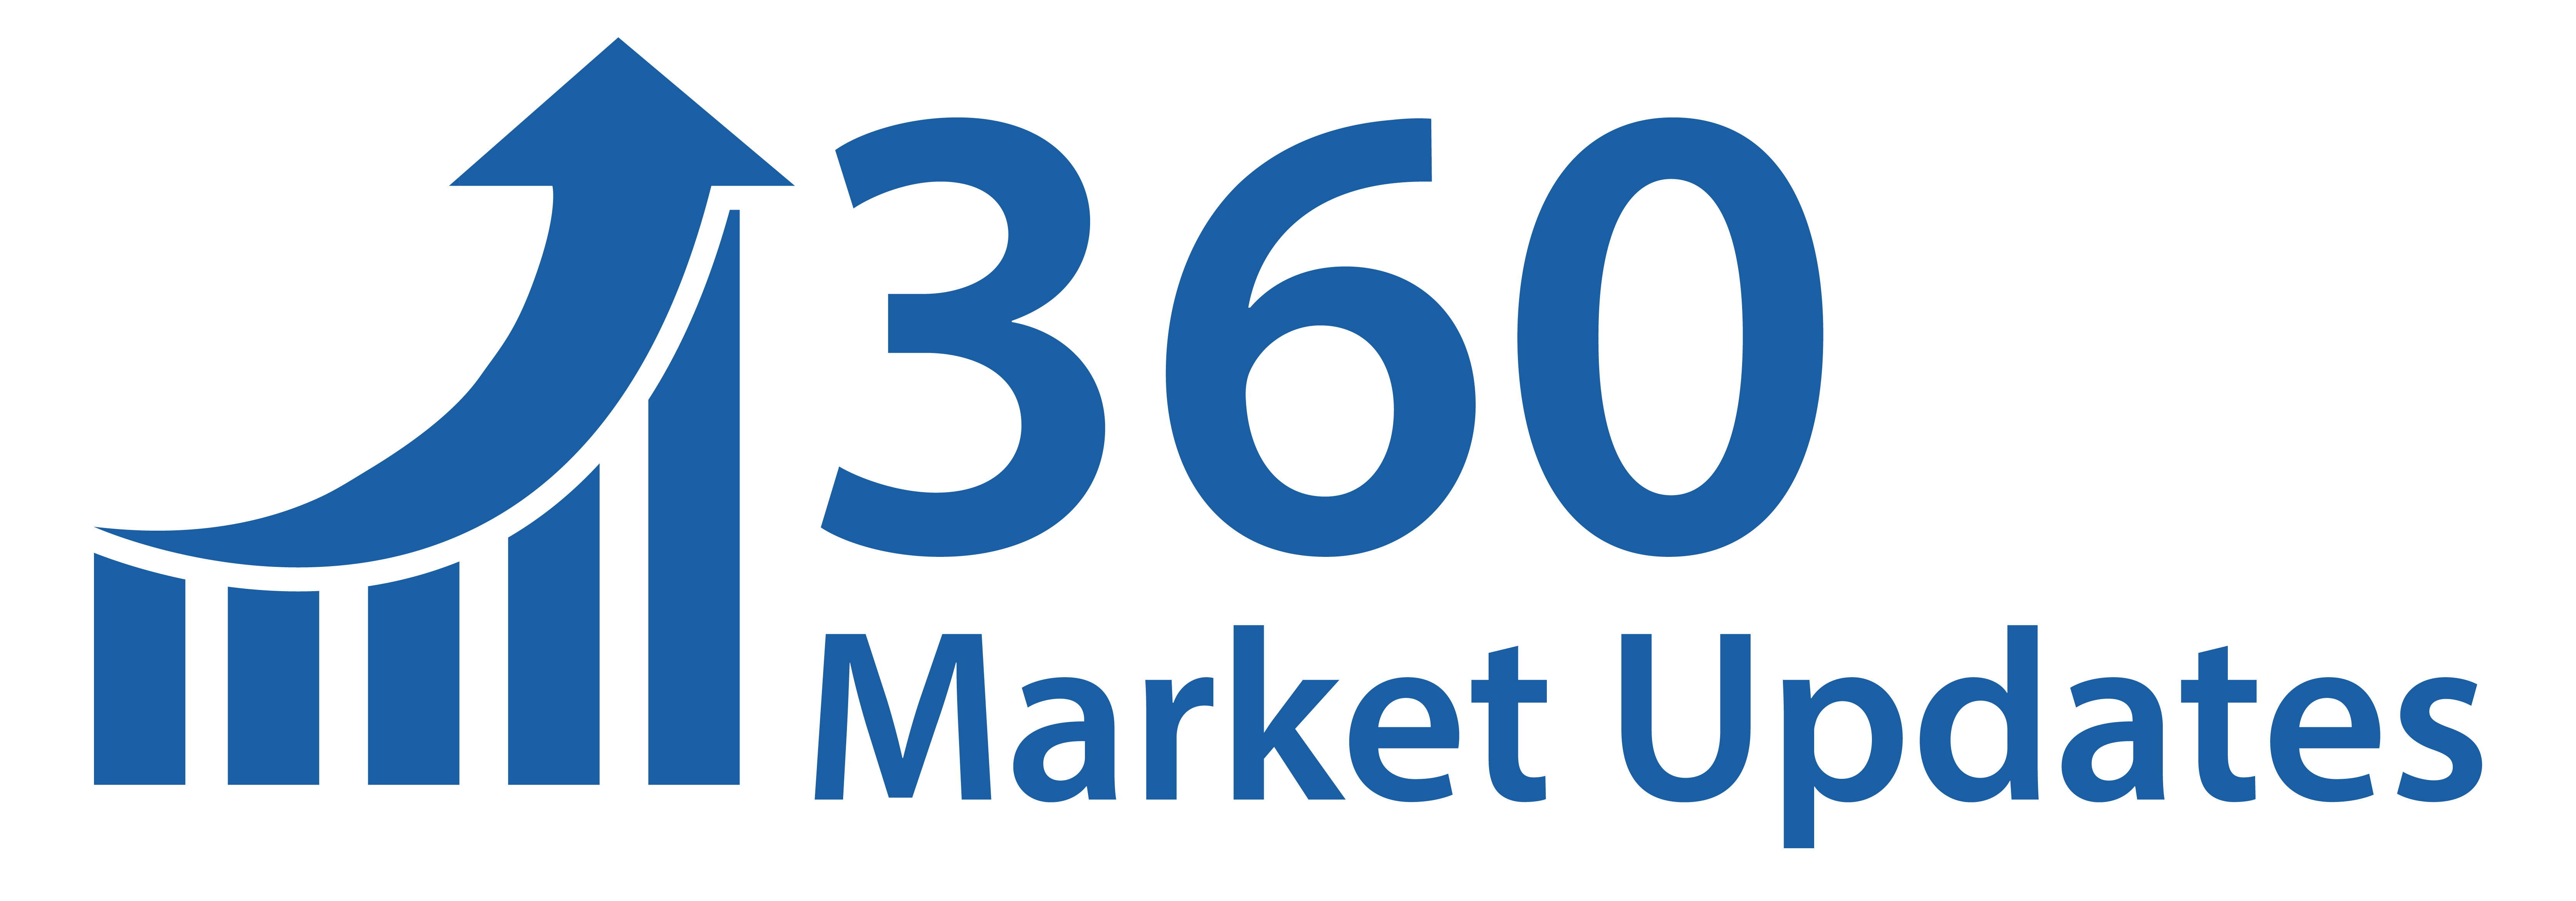 Kombucha Market 2020 -Key Leaders Analysis, Segmentation, Growth, Future Trends, Gross Margin, Demands, Emerging Technology by Regional Forecast By 360 Market Updates